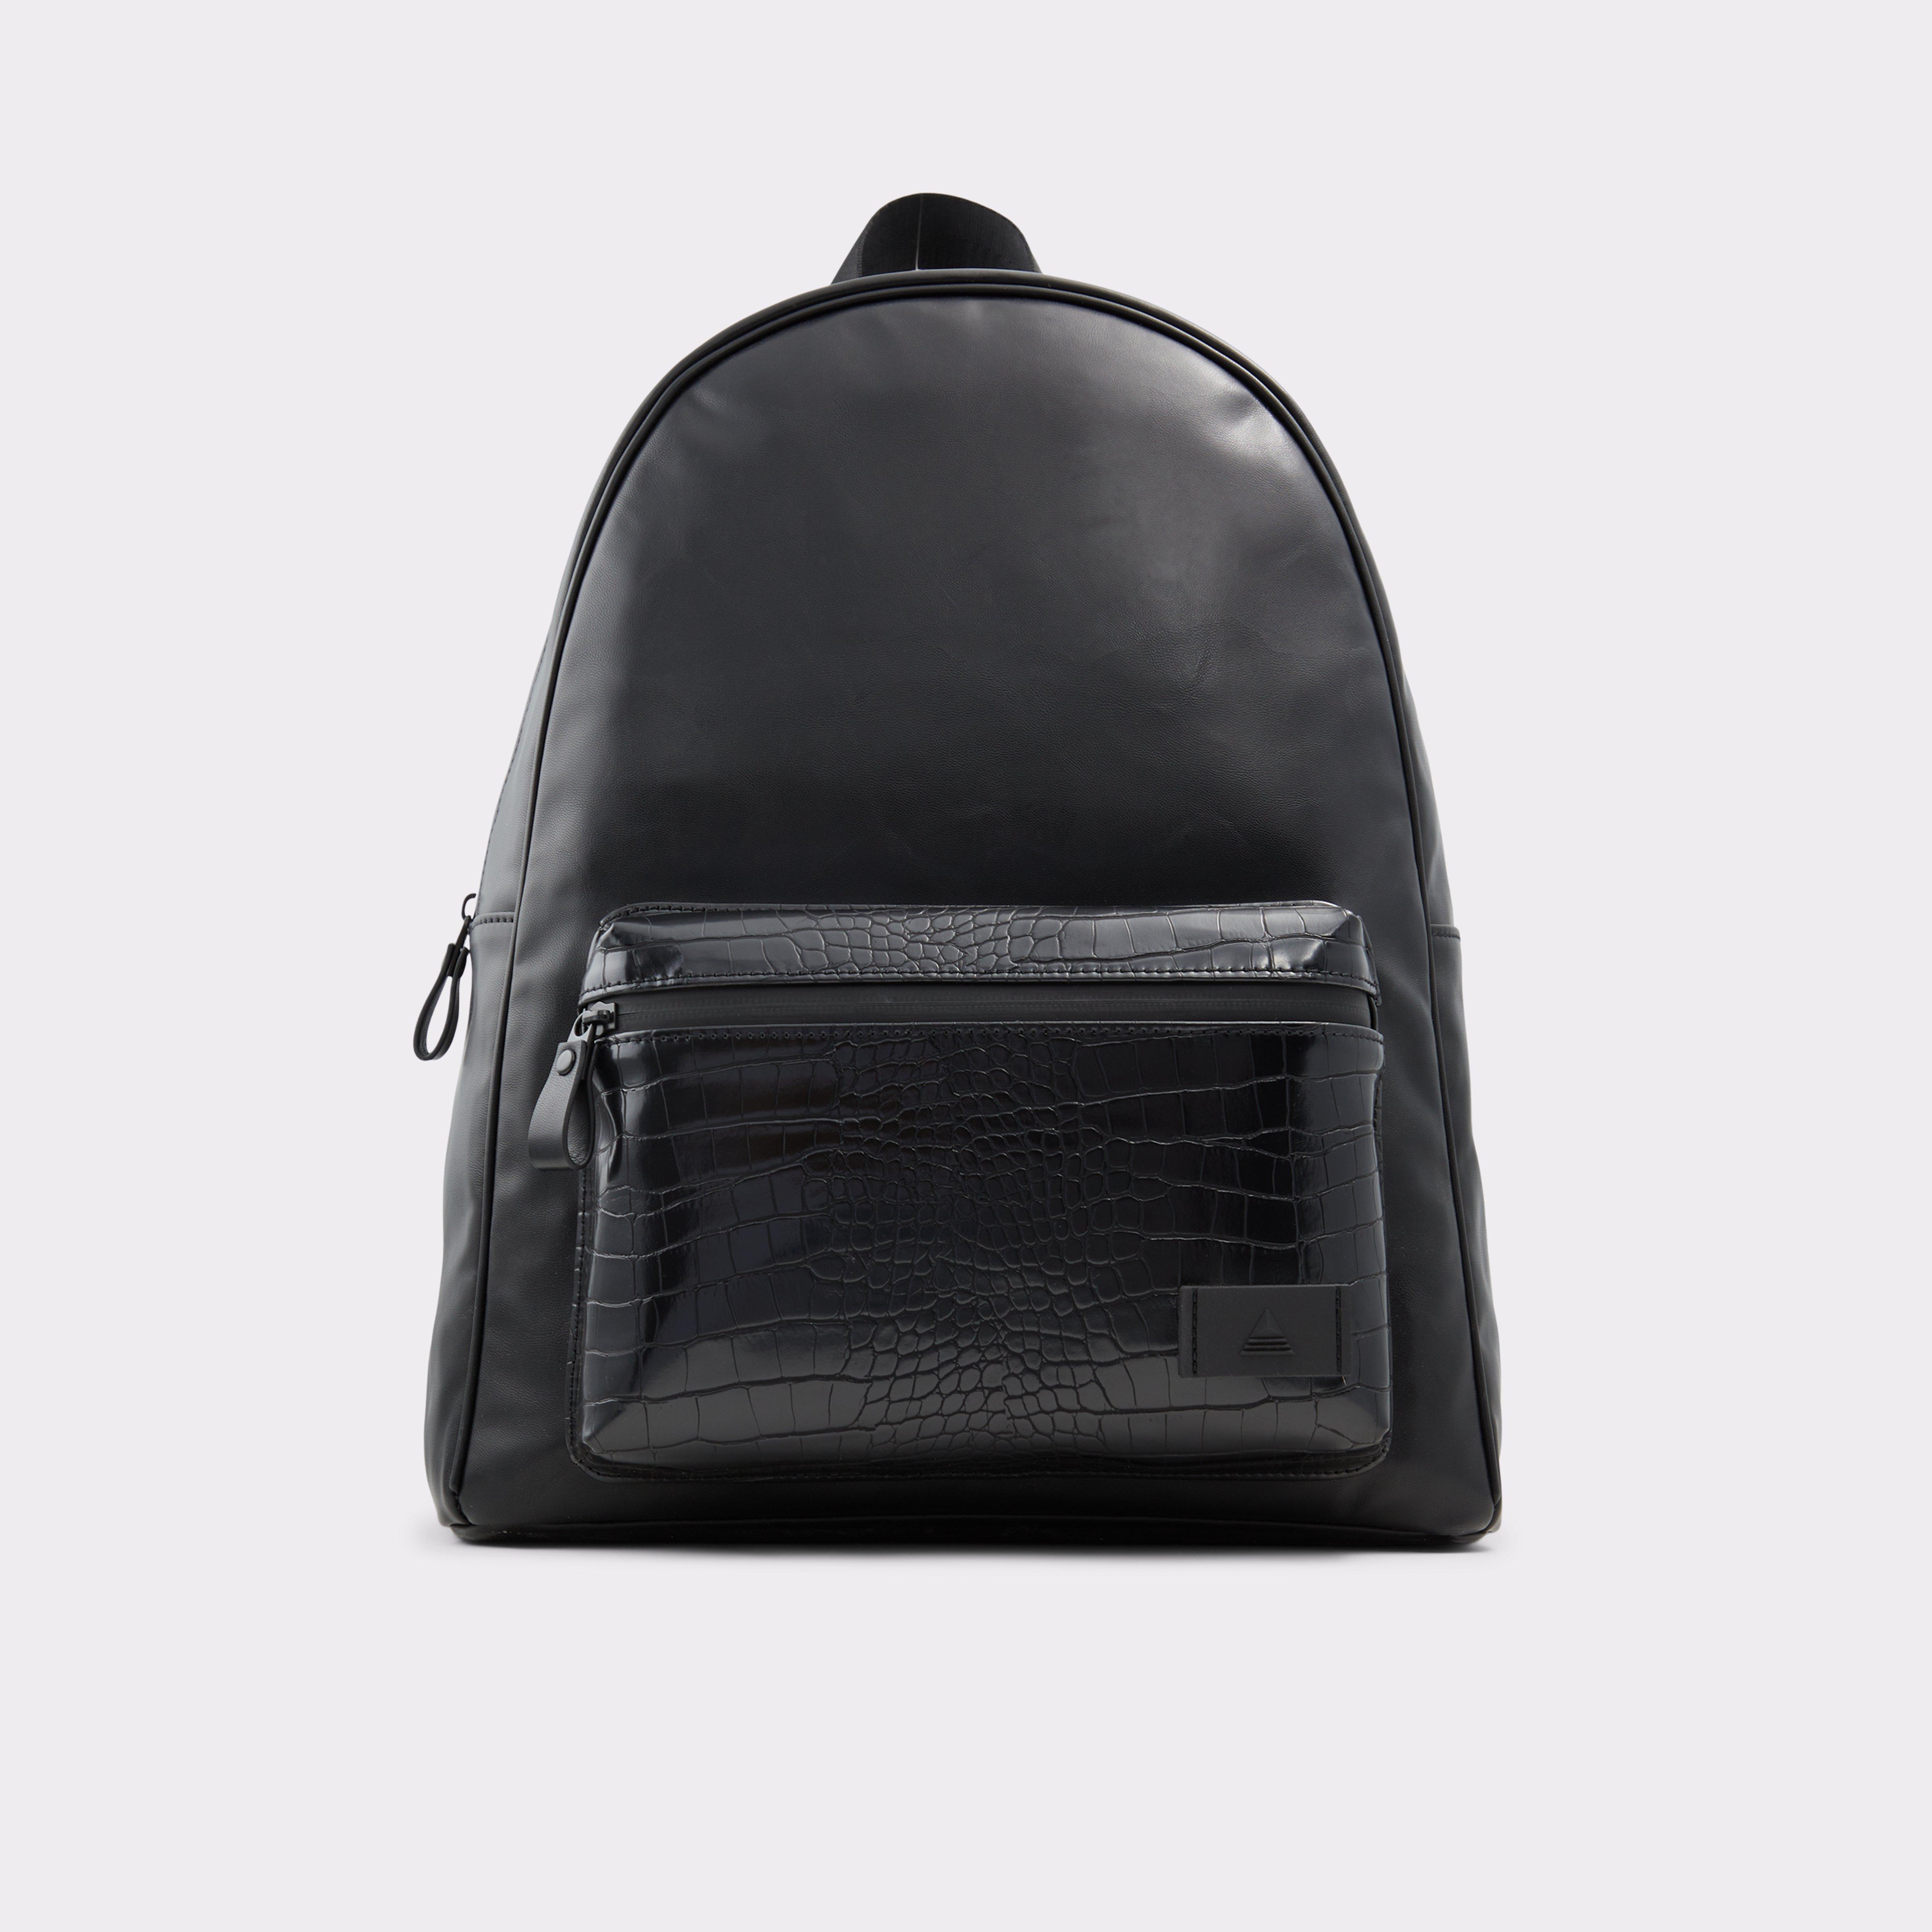 Aldo Black Faux Leather Small Mini Backpack Fashion Bag | eBay